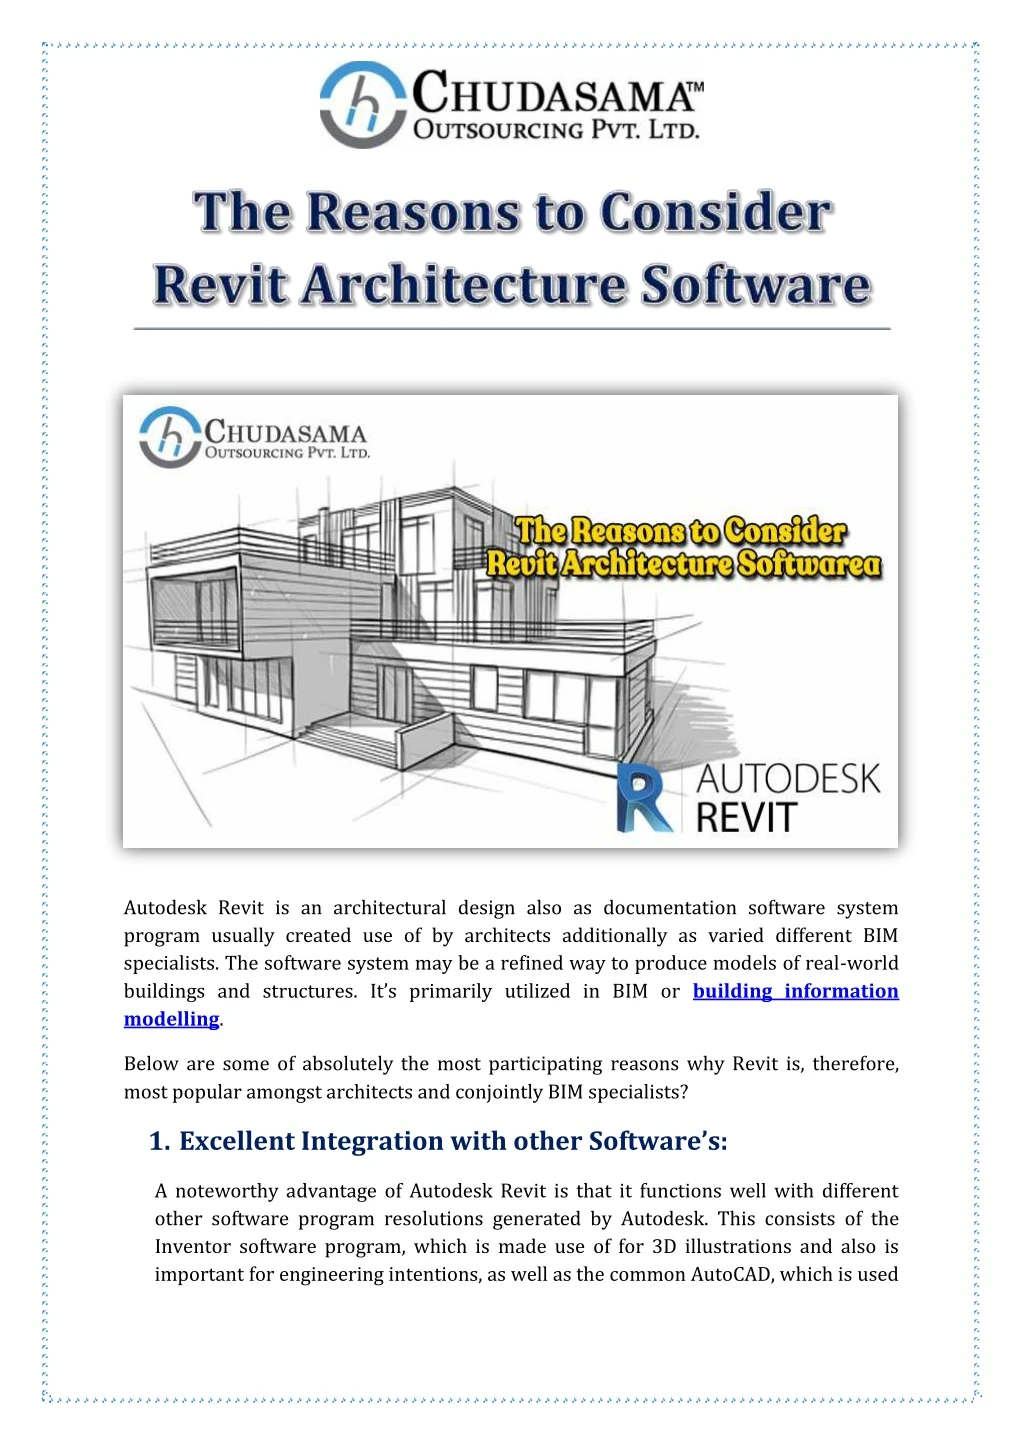 autodesk revit is an architectural design also